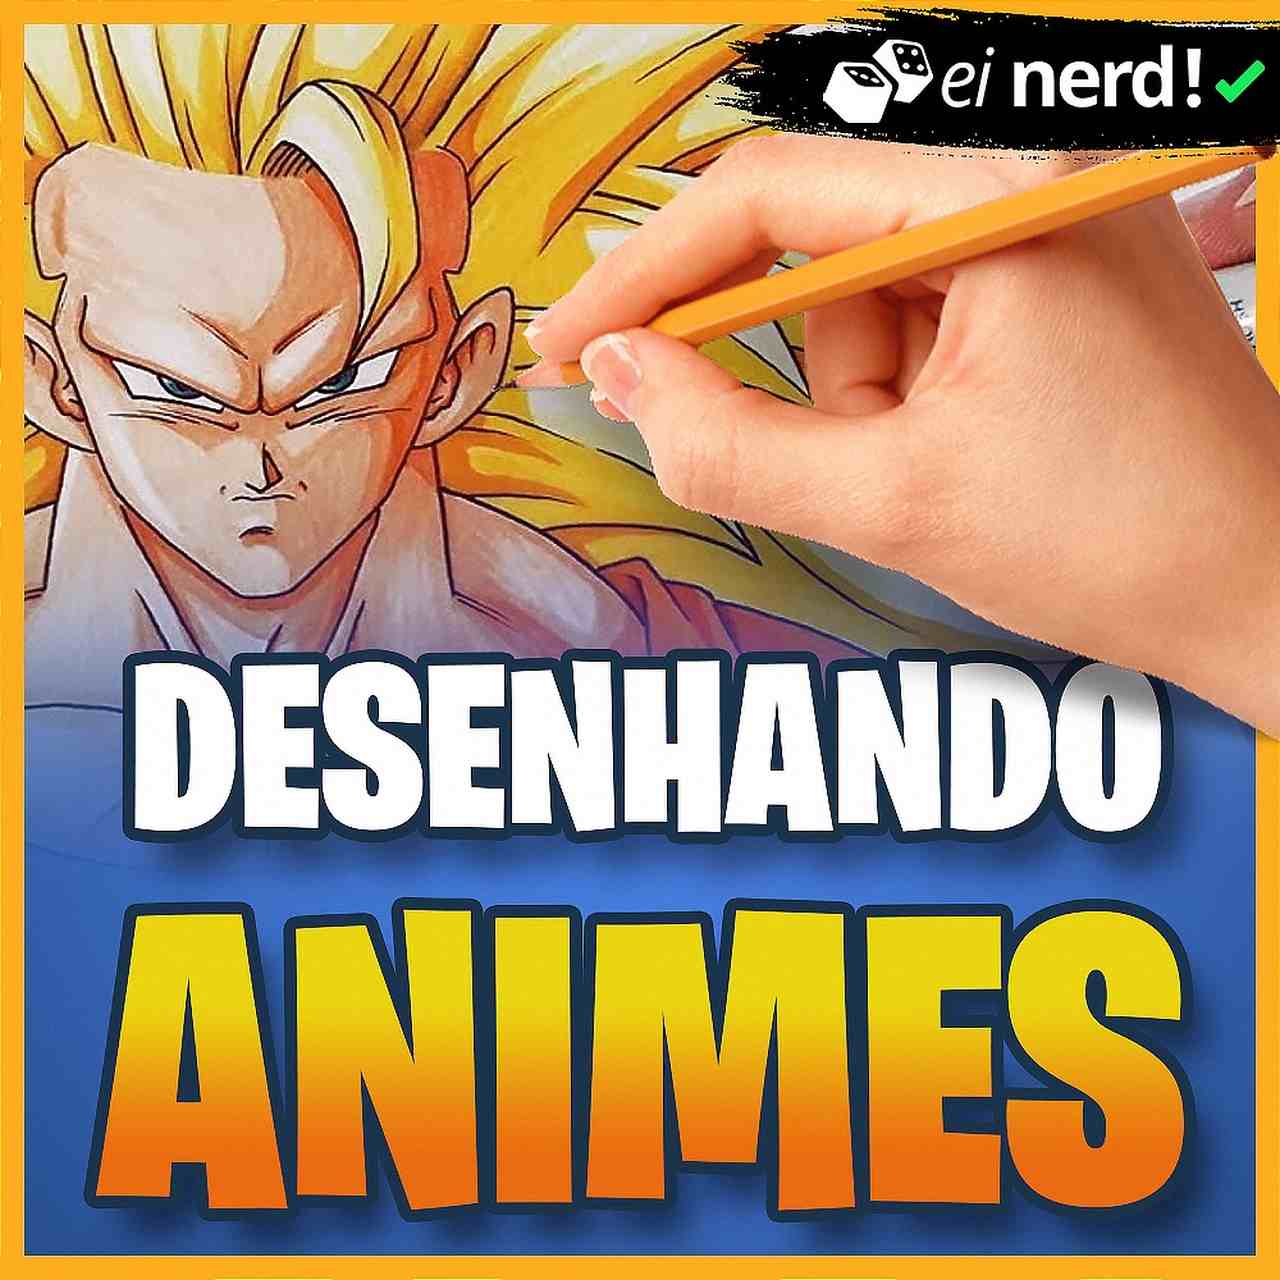 curso desenhando animes ei nerd